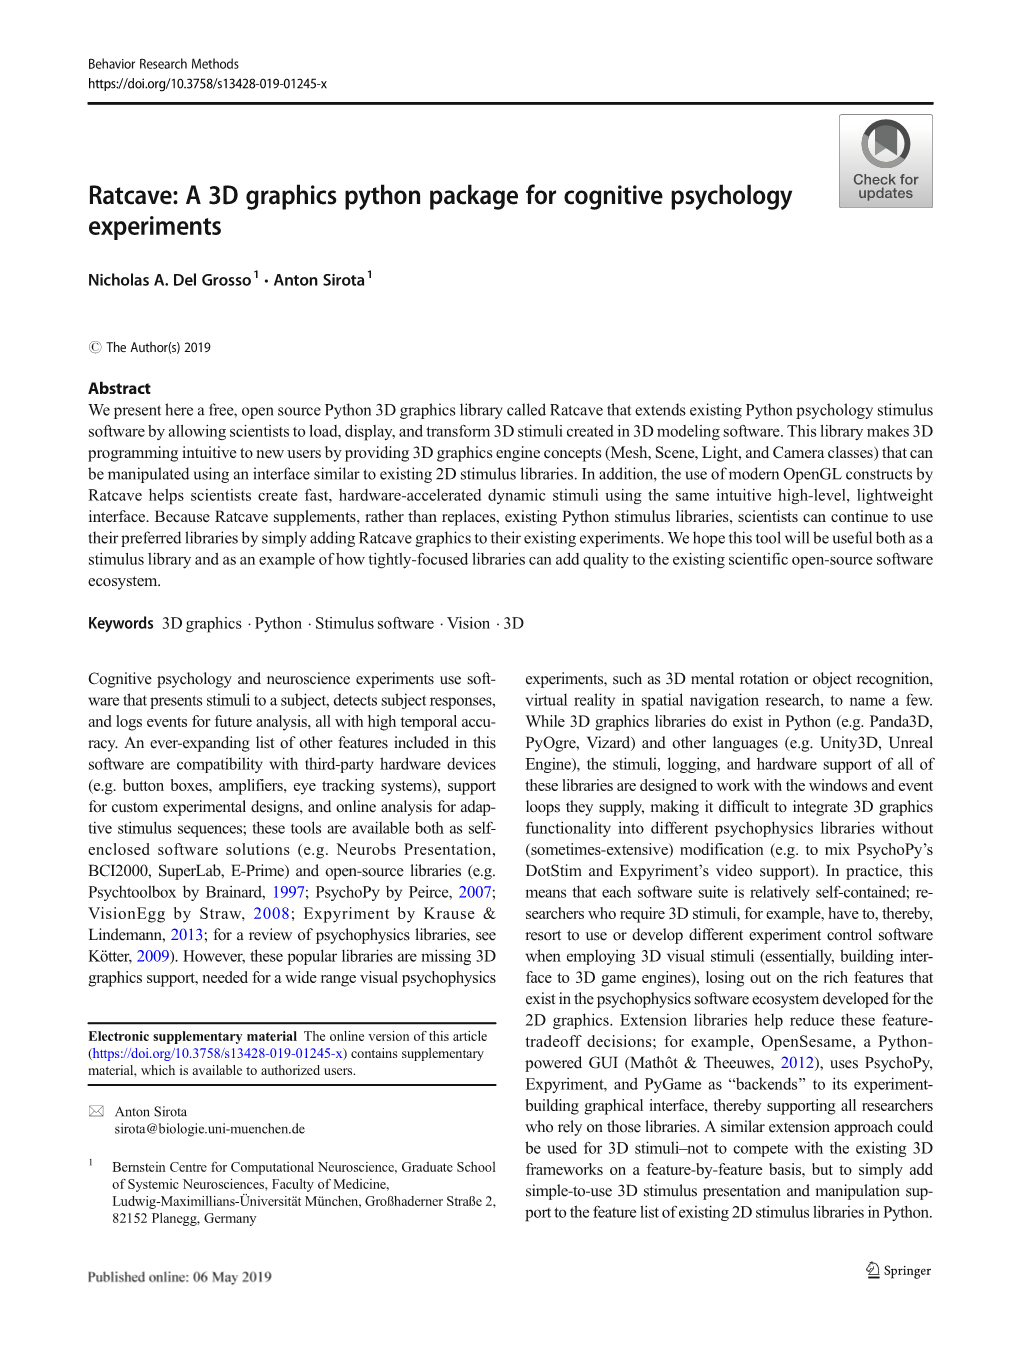 A 3D Graphics Python Package for Cognitive Psychology Experiments